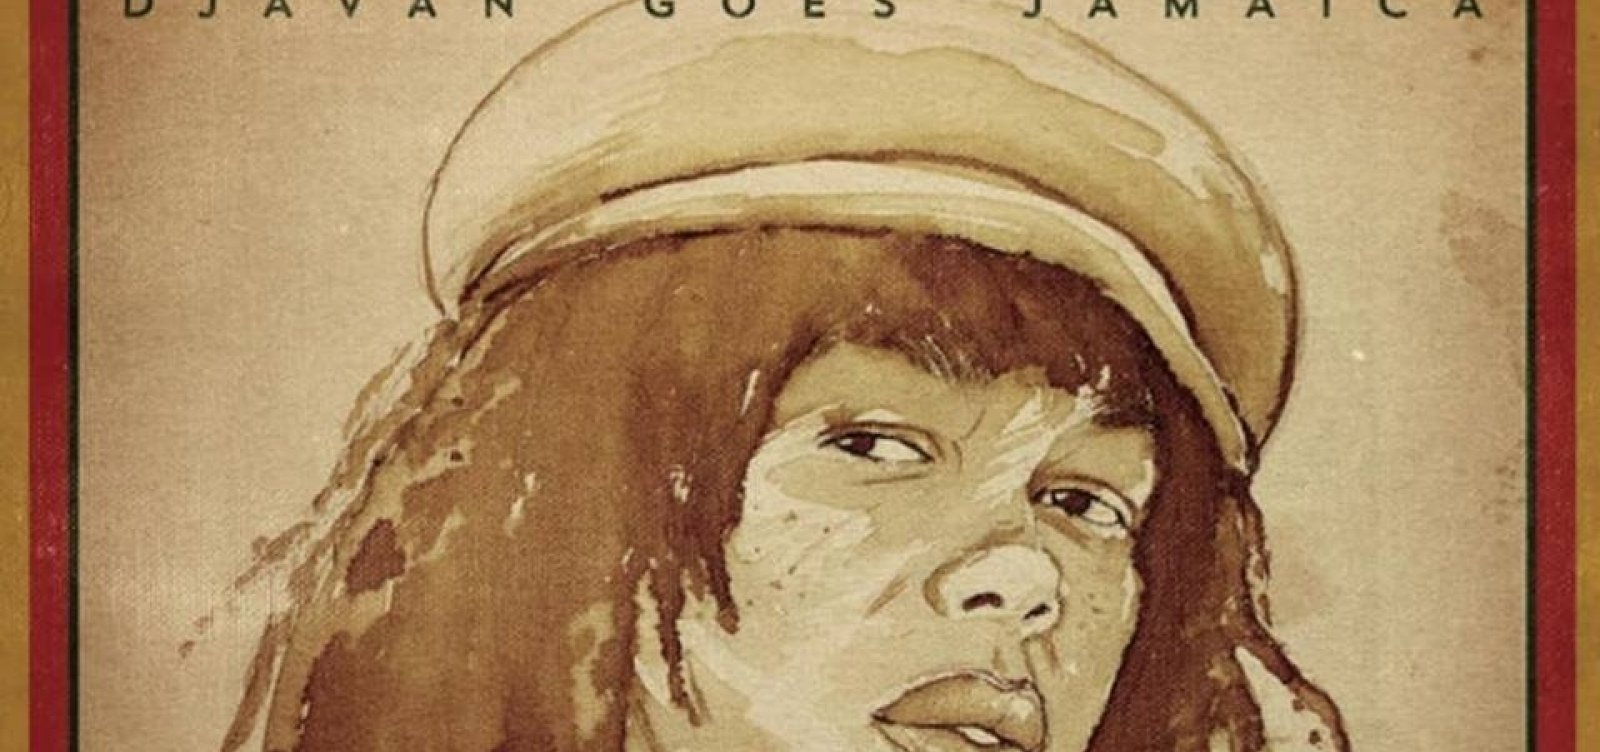 'Jah-Van': clássicos de Djavan são regravados em reggae por grandes artistas